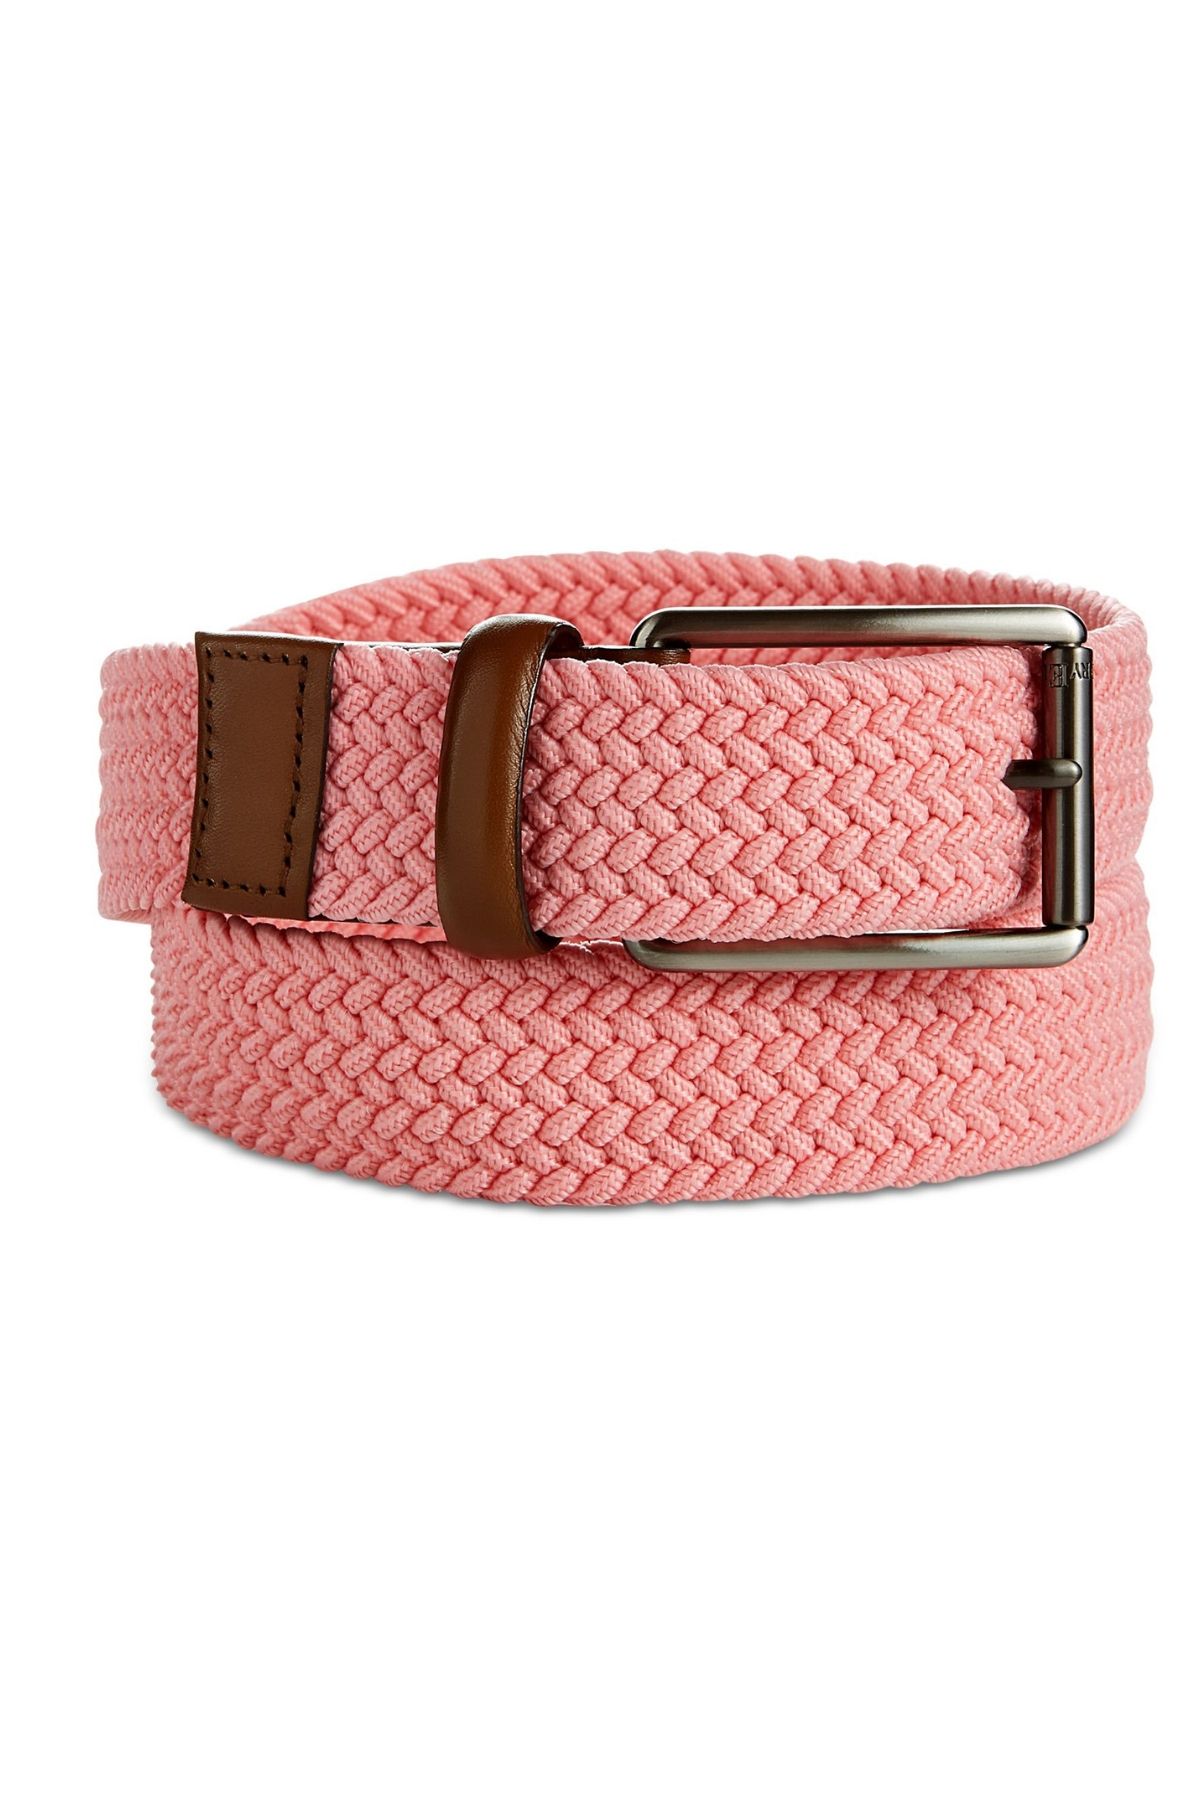 Perry Ellis Portfolio Pink Webbed Leather-Trim Belt